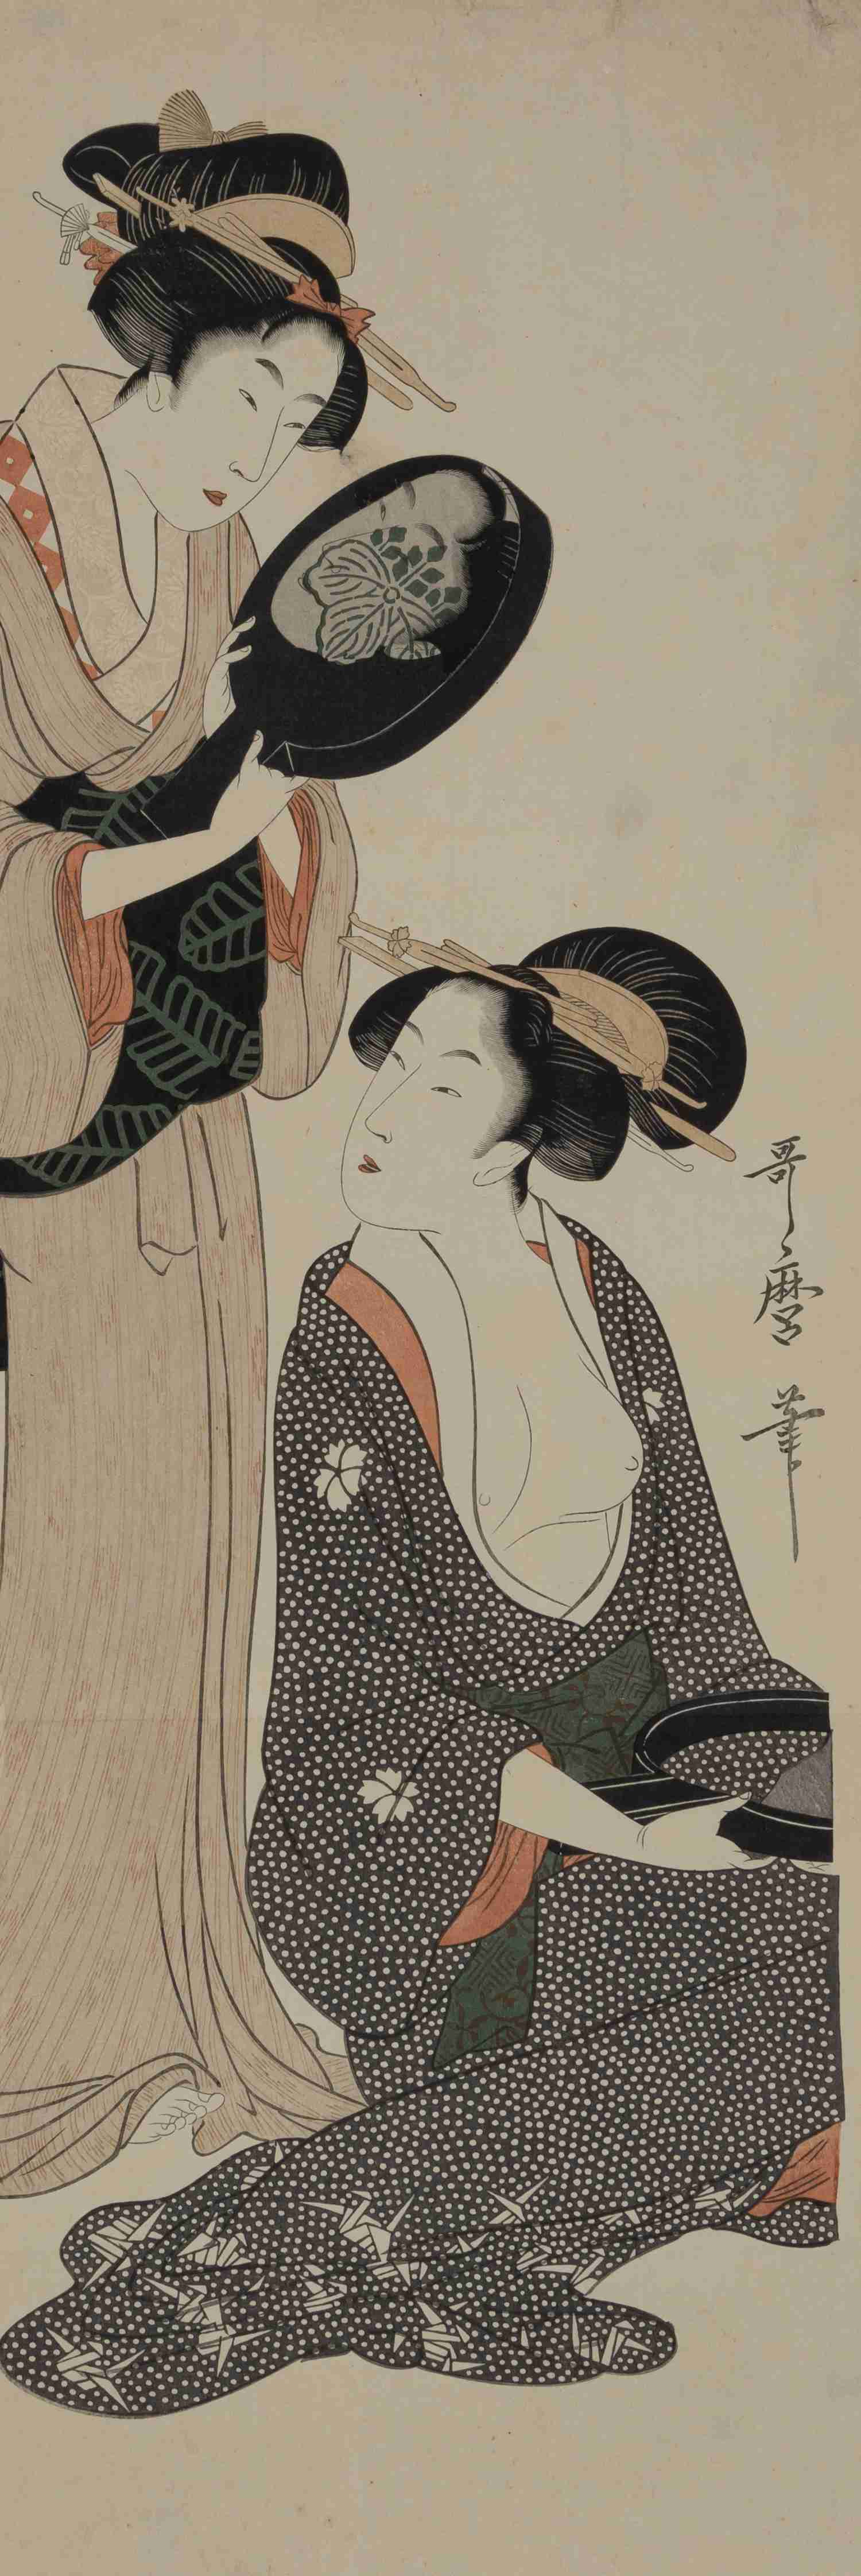 (Коллекция художника Ярослава Титова) Утагава Куниёси (?). Две гейши. Япония, период Эдо, вторая половина XIX века.